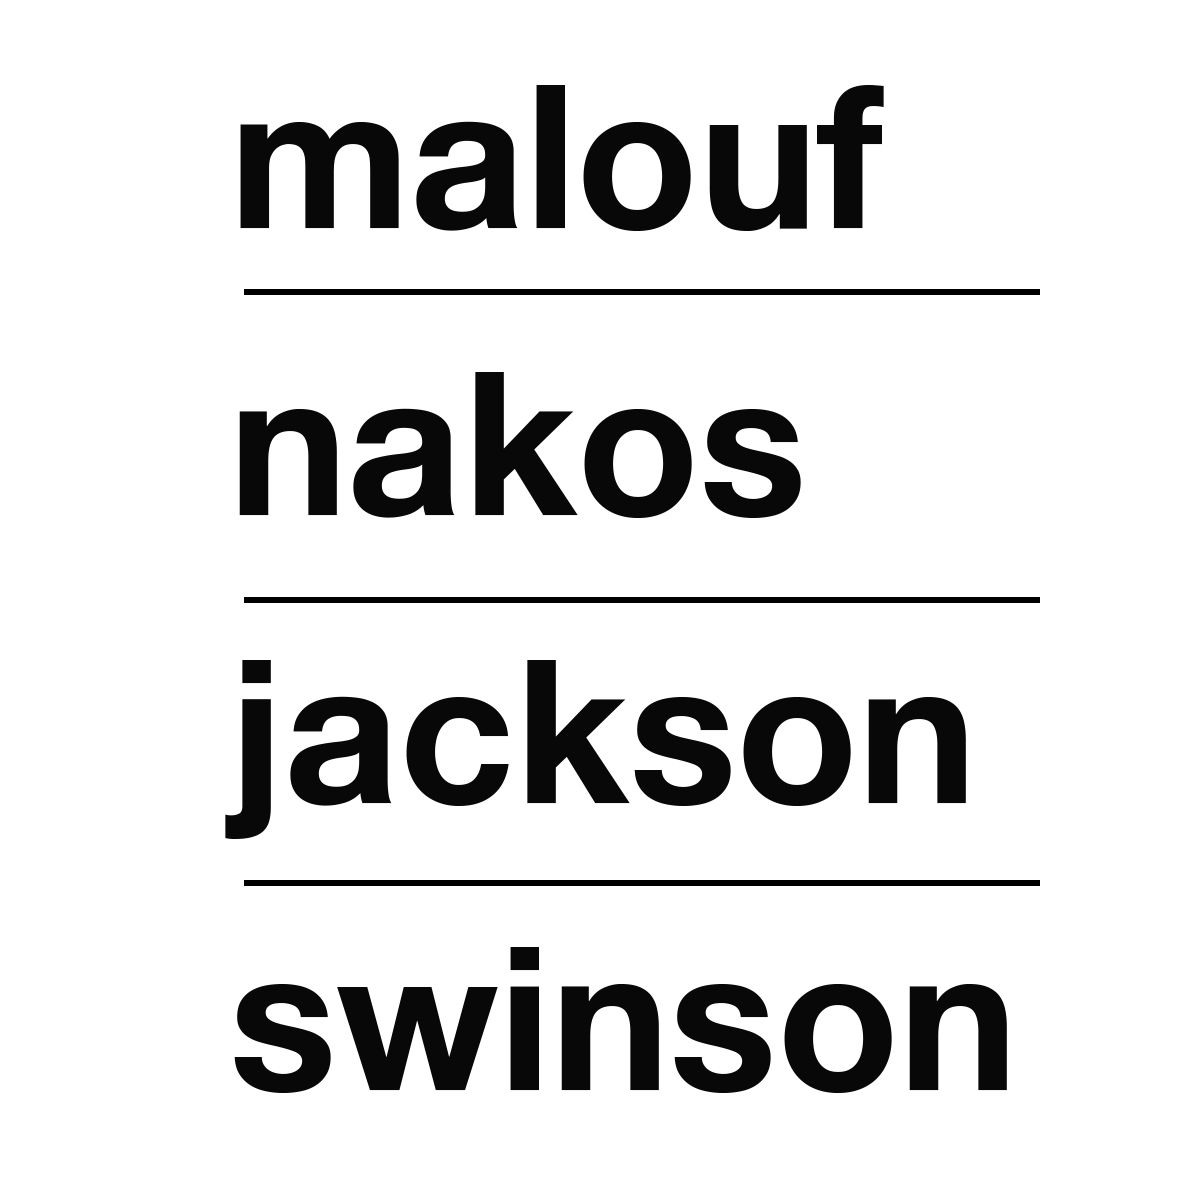 Malouf Nakos Jackson & Swinson, P.C.